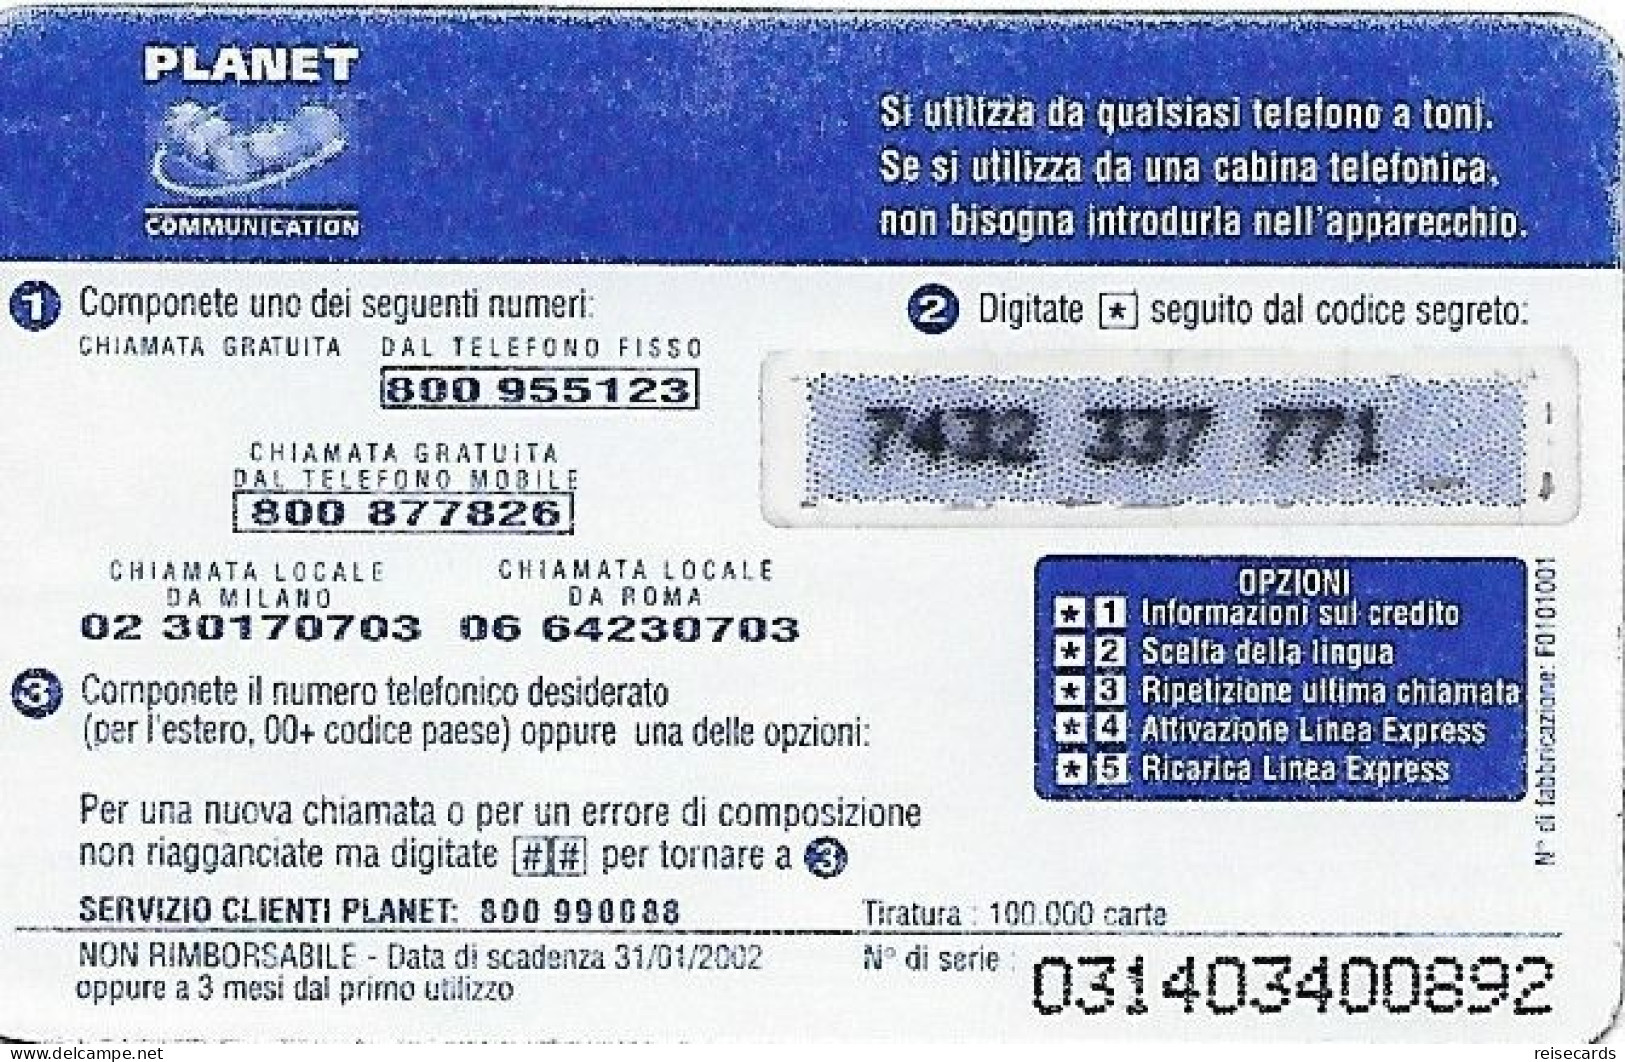 Italy: Prepaid Planet Communication - Firenze, Chiesa De S. Croce - [2] Sim Cards, Prepaid & Refills